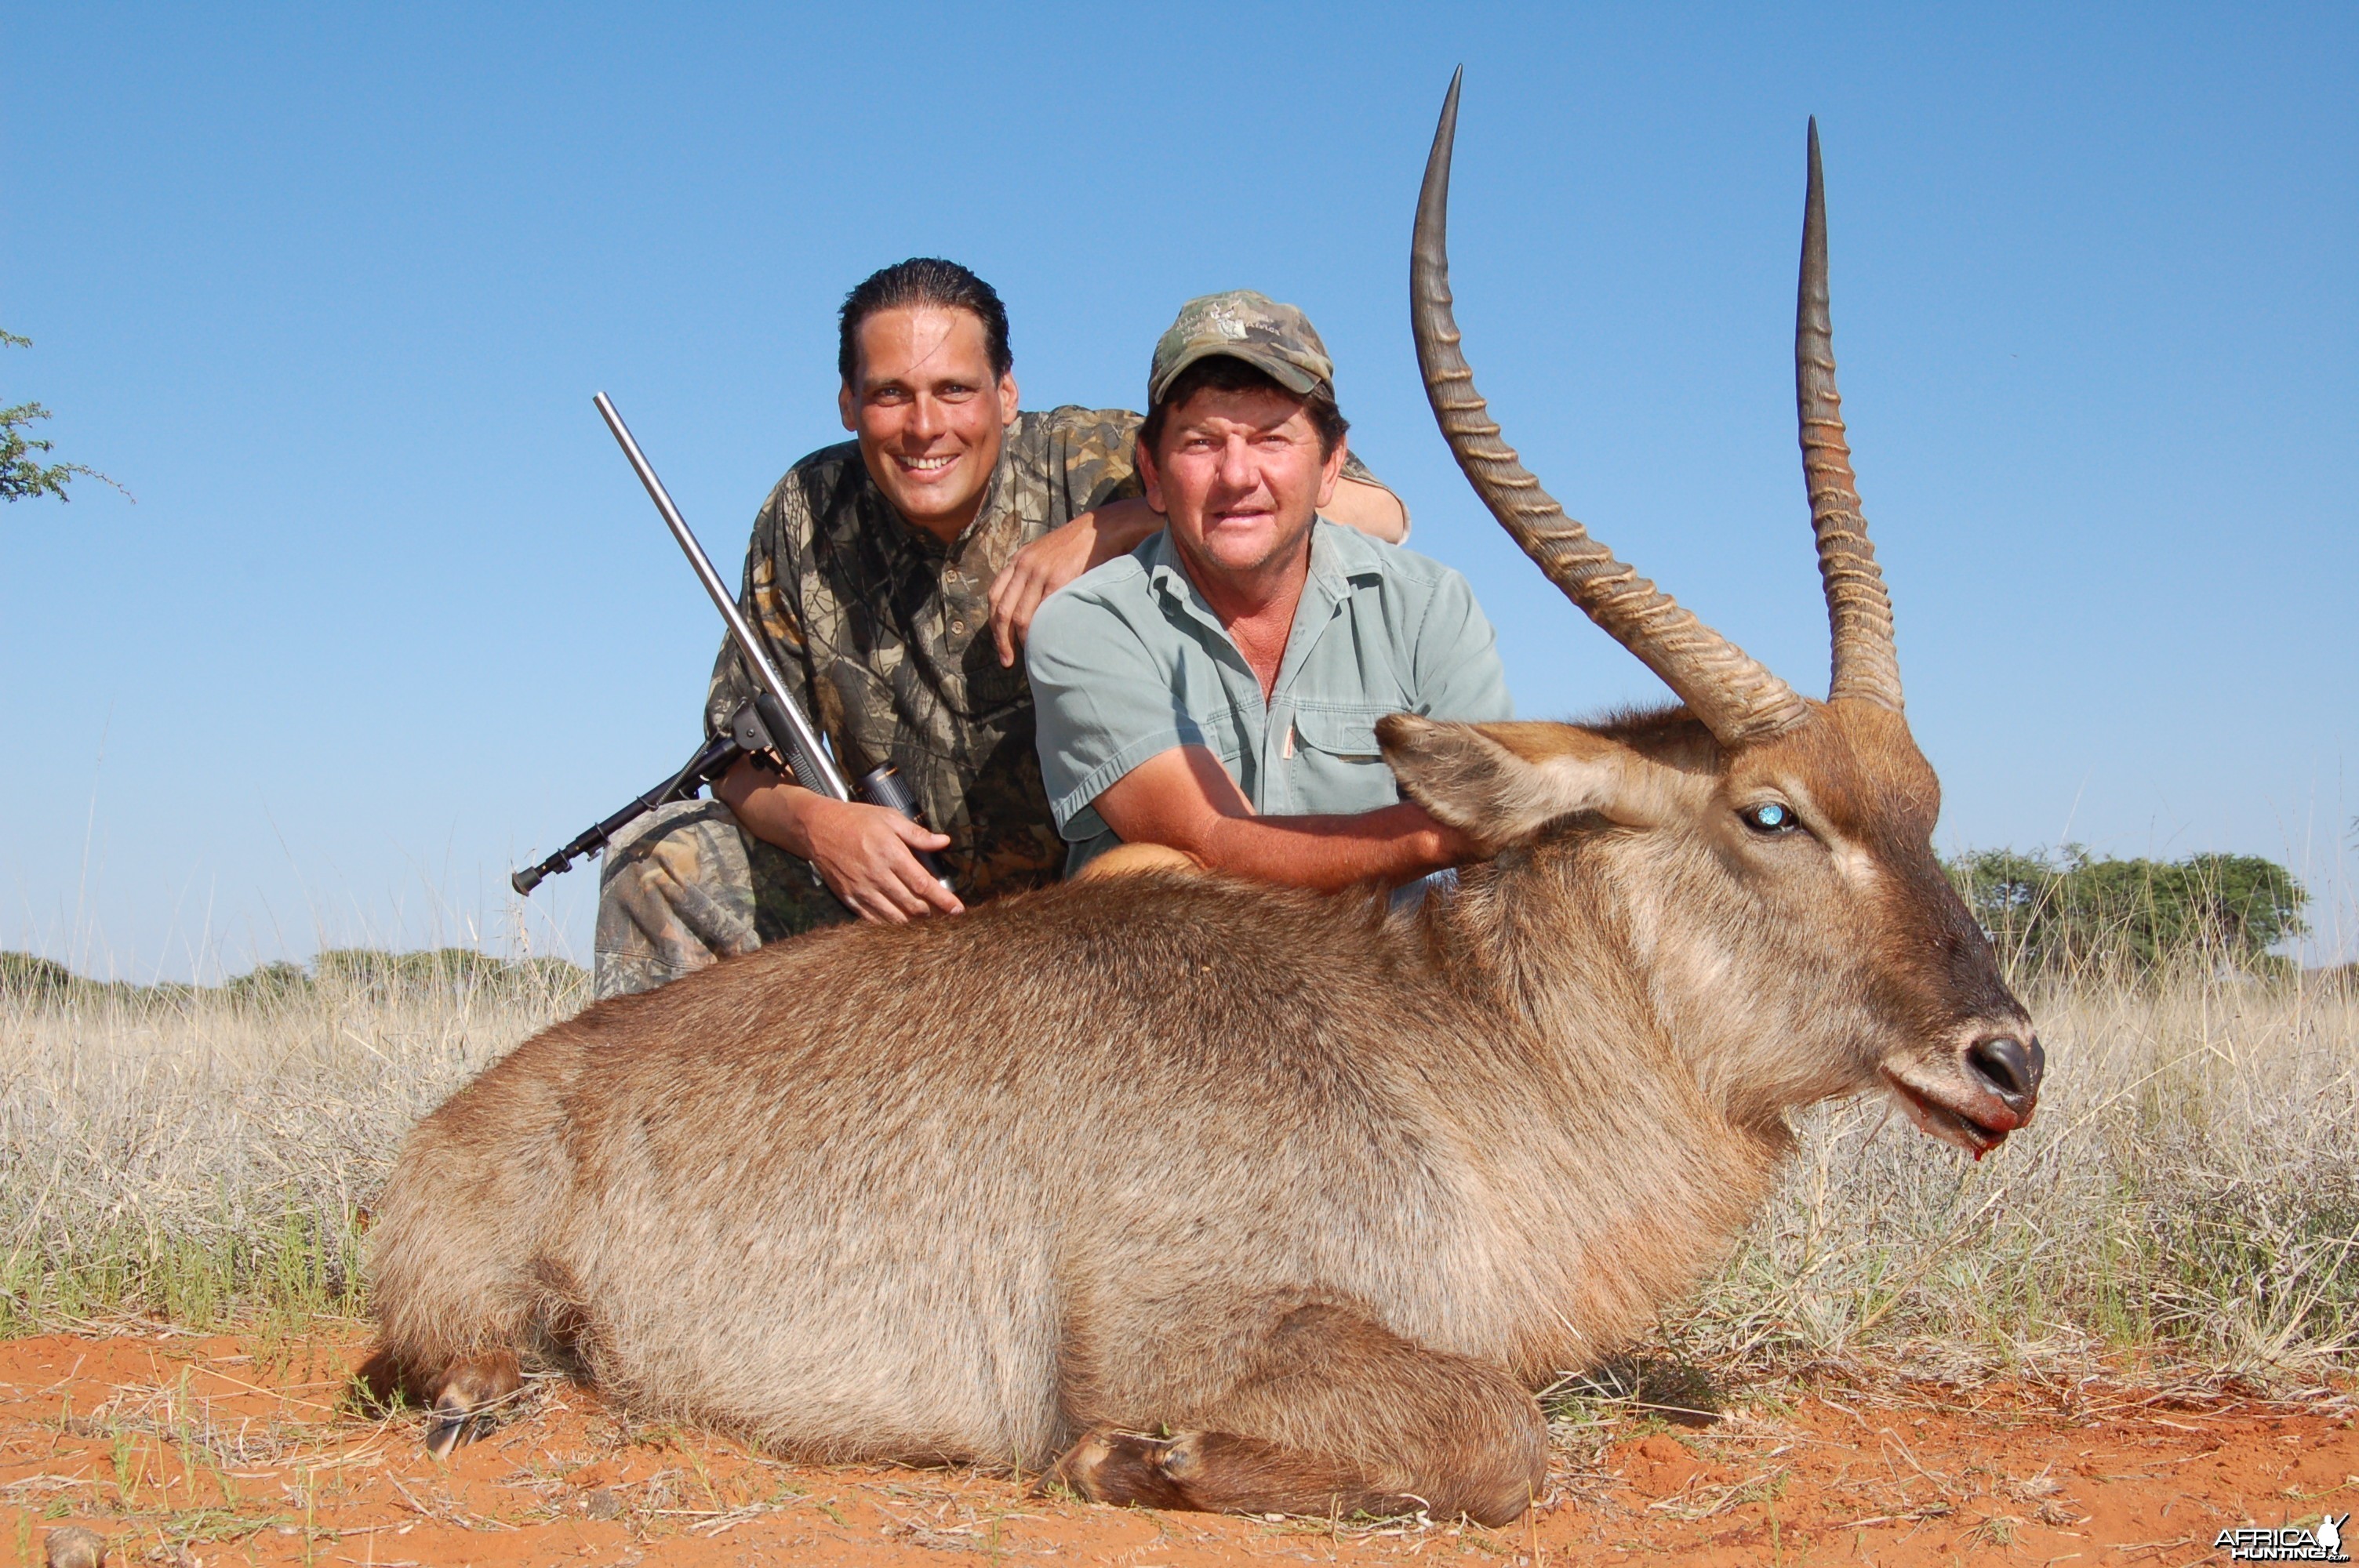 Hunting Waterbuck with Wintershoek Johnny Vivier Safaris in SA